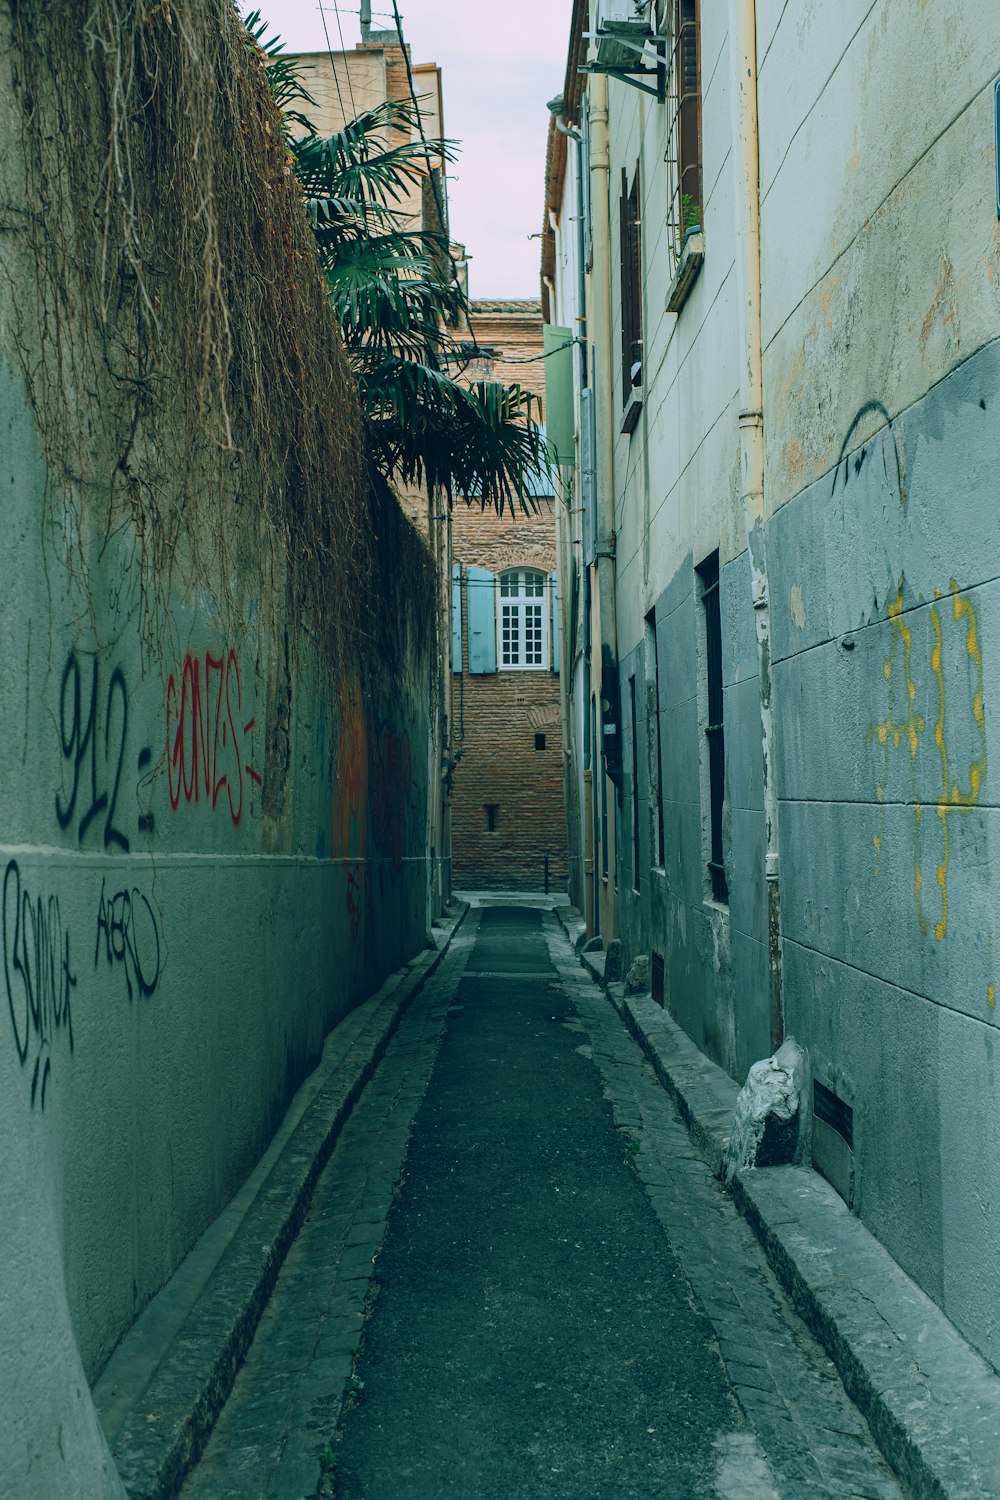 Un callejón estrecho con grafitis en las paredes